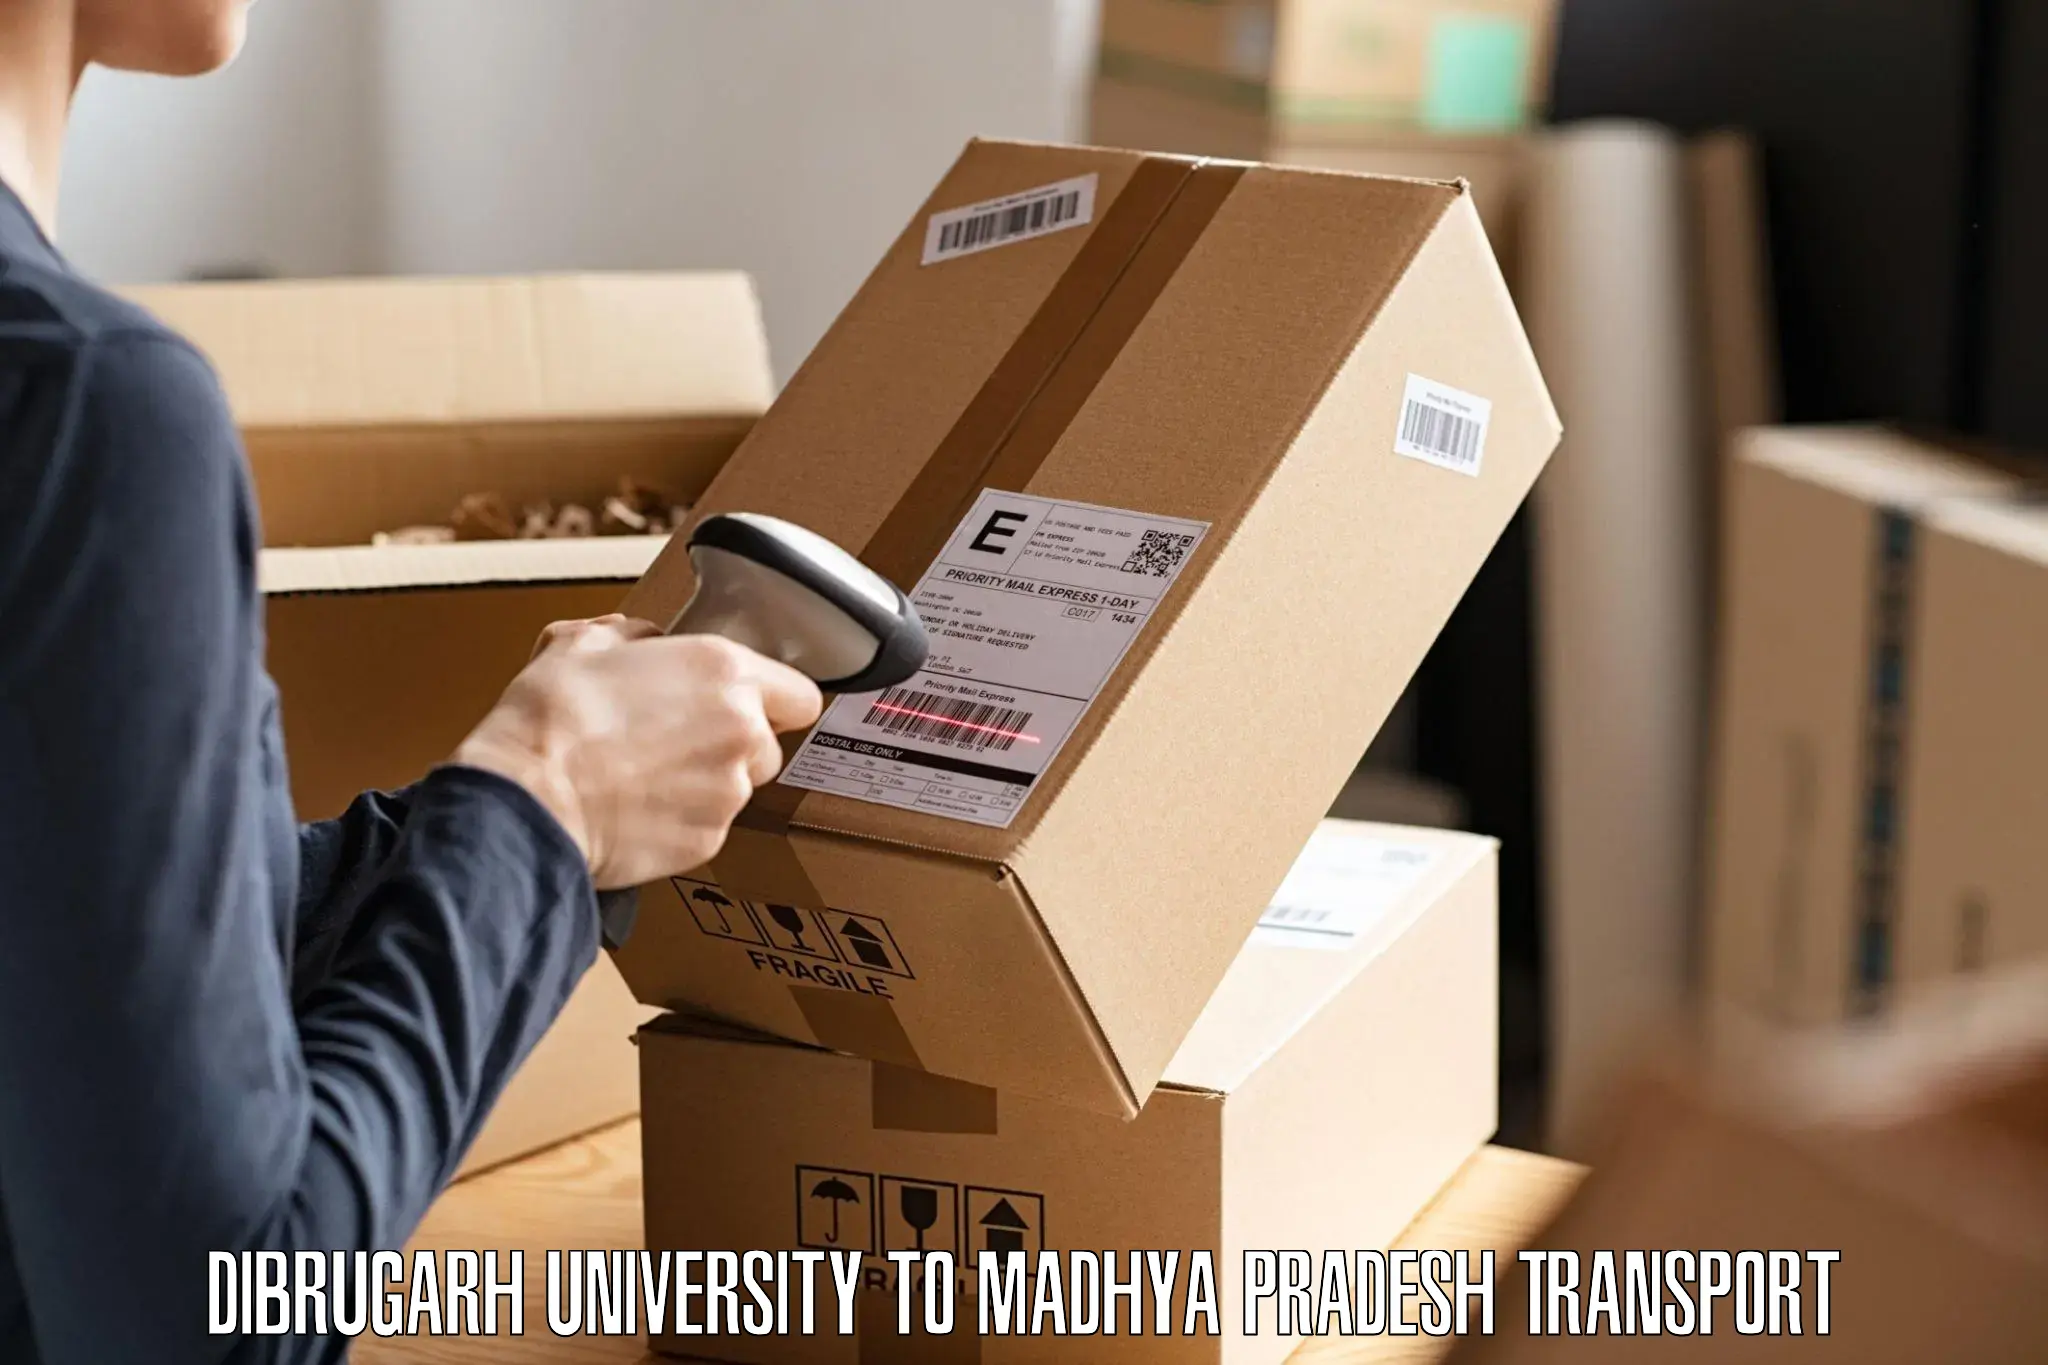 Online transport service Dibrugarh University to Mundi